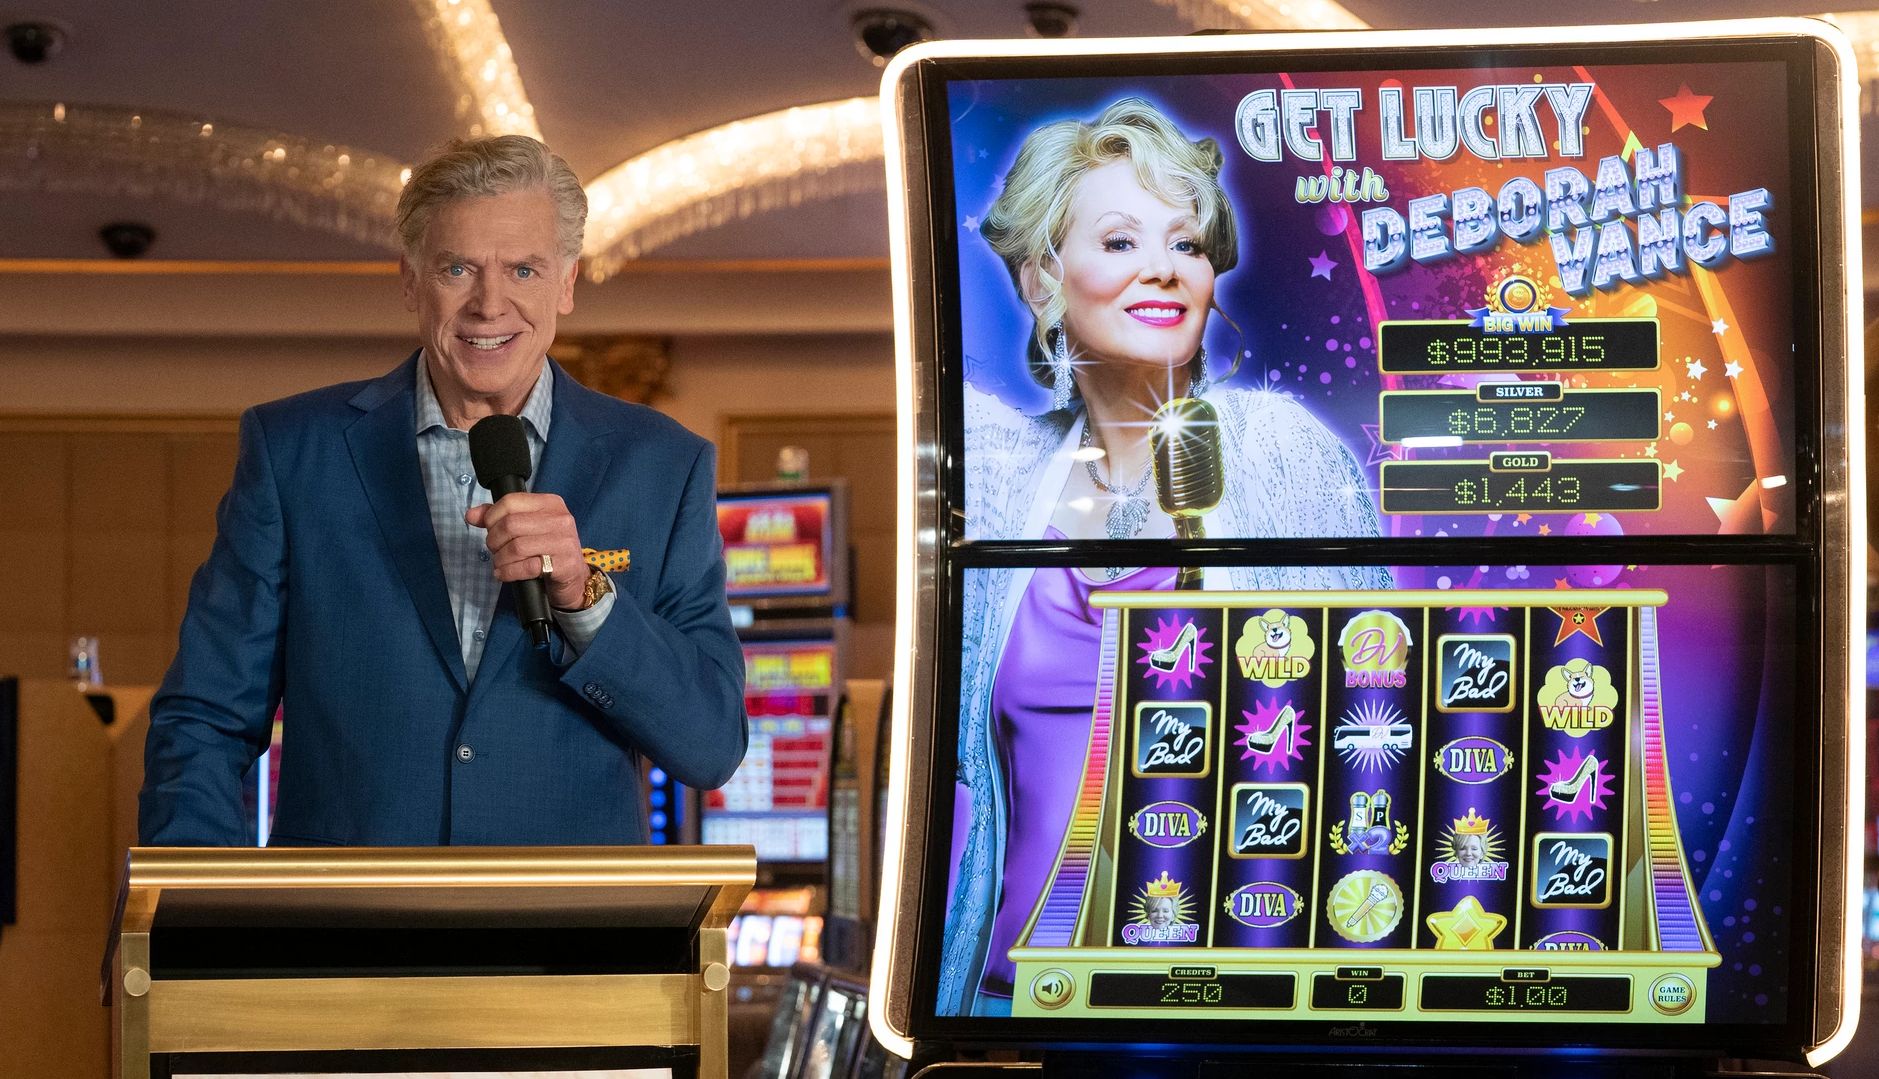 Christopher McDonald holding a microphone standing next to slot machine featuring Jean Smart's character Deborah Vance in Hacks